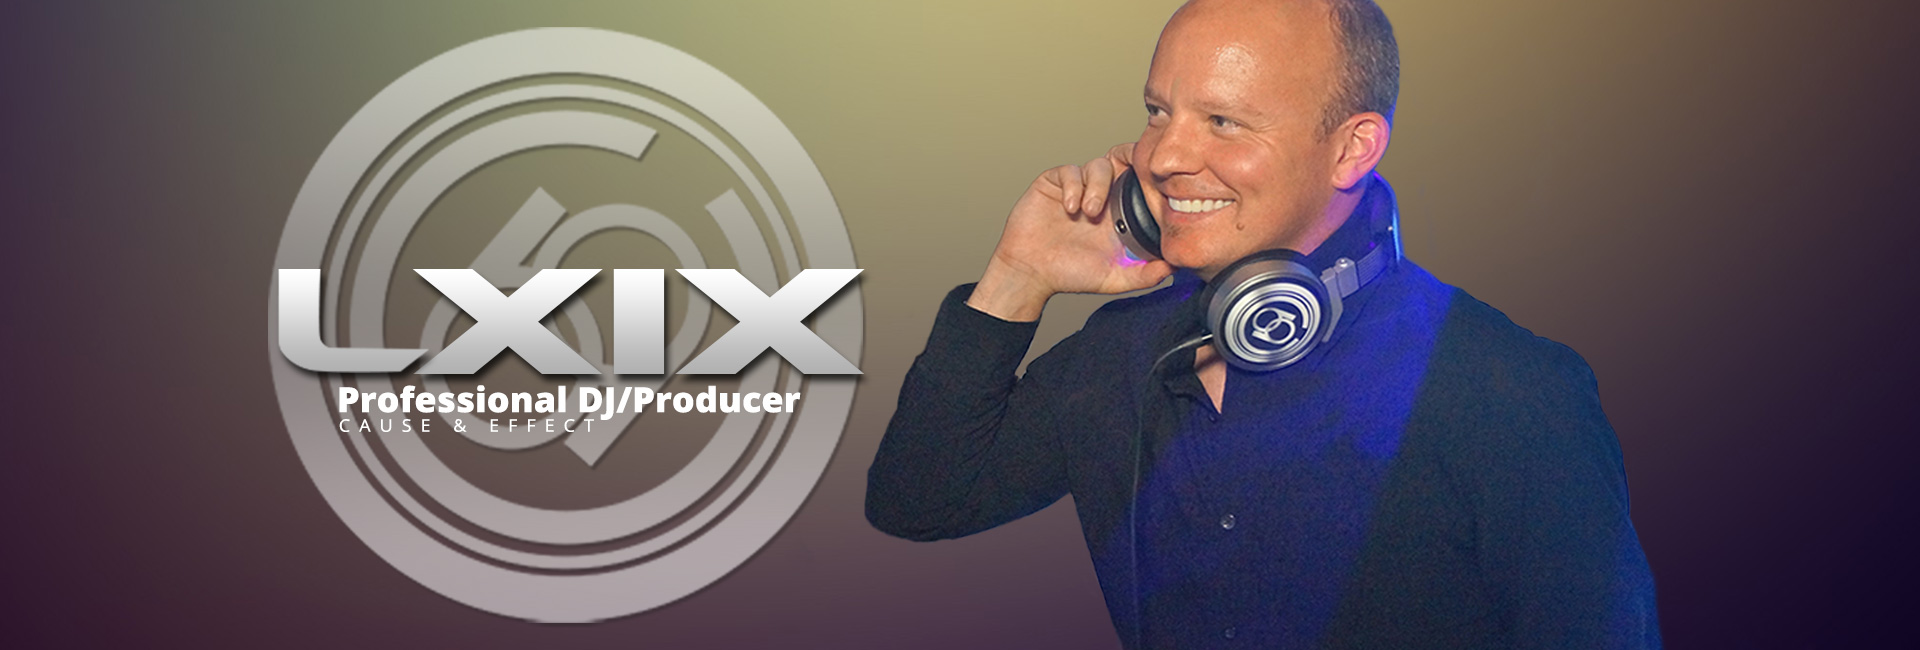 DJ LXIX Logo